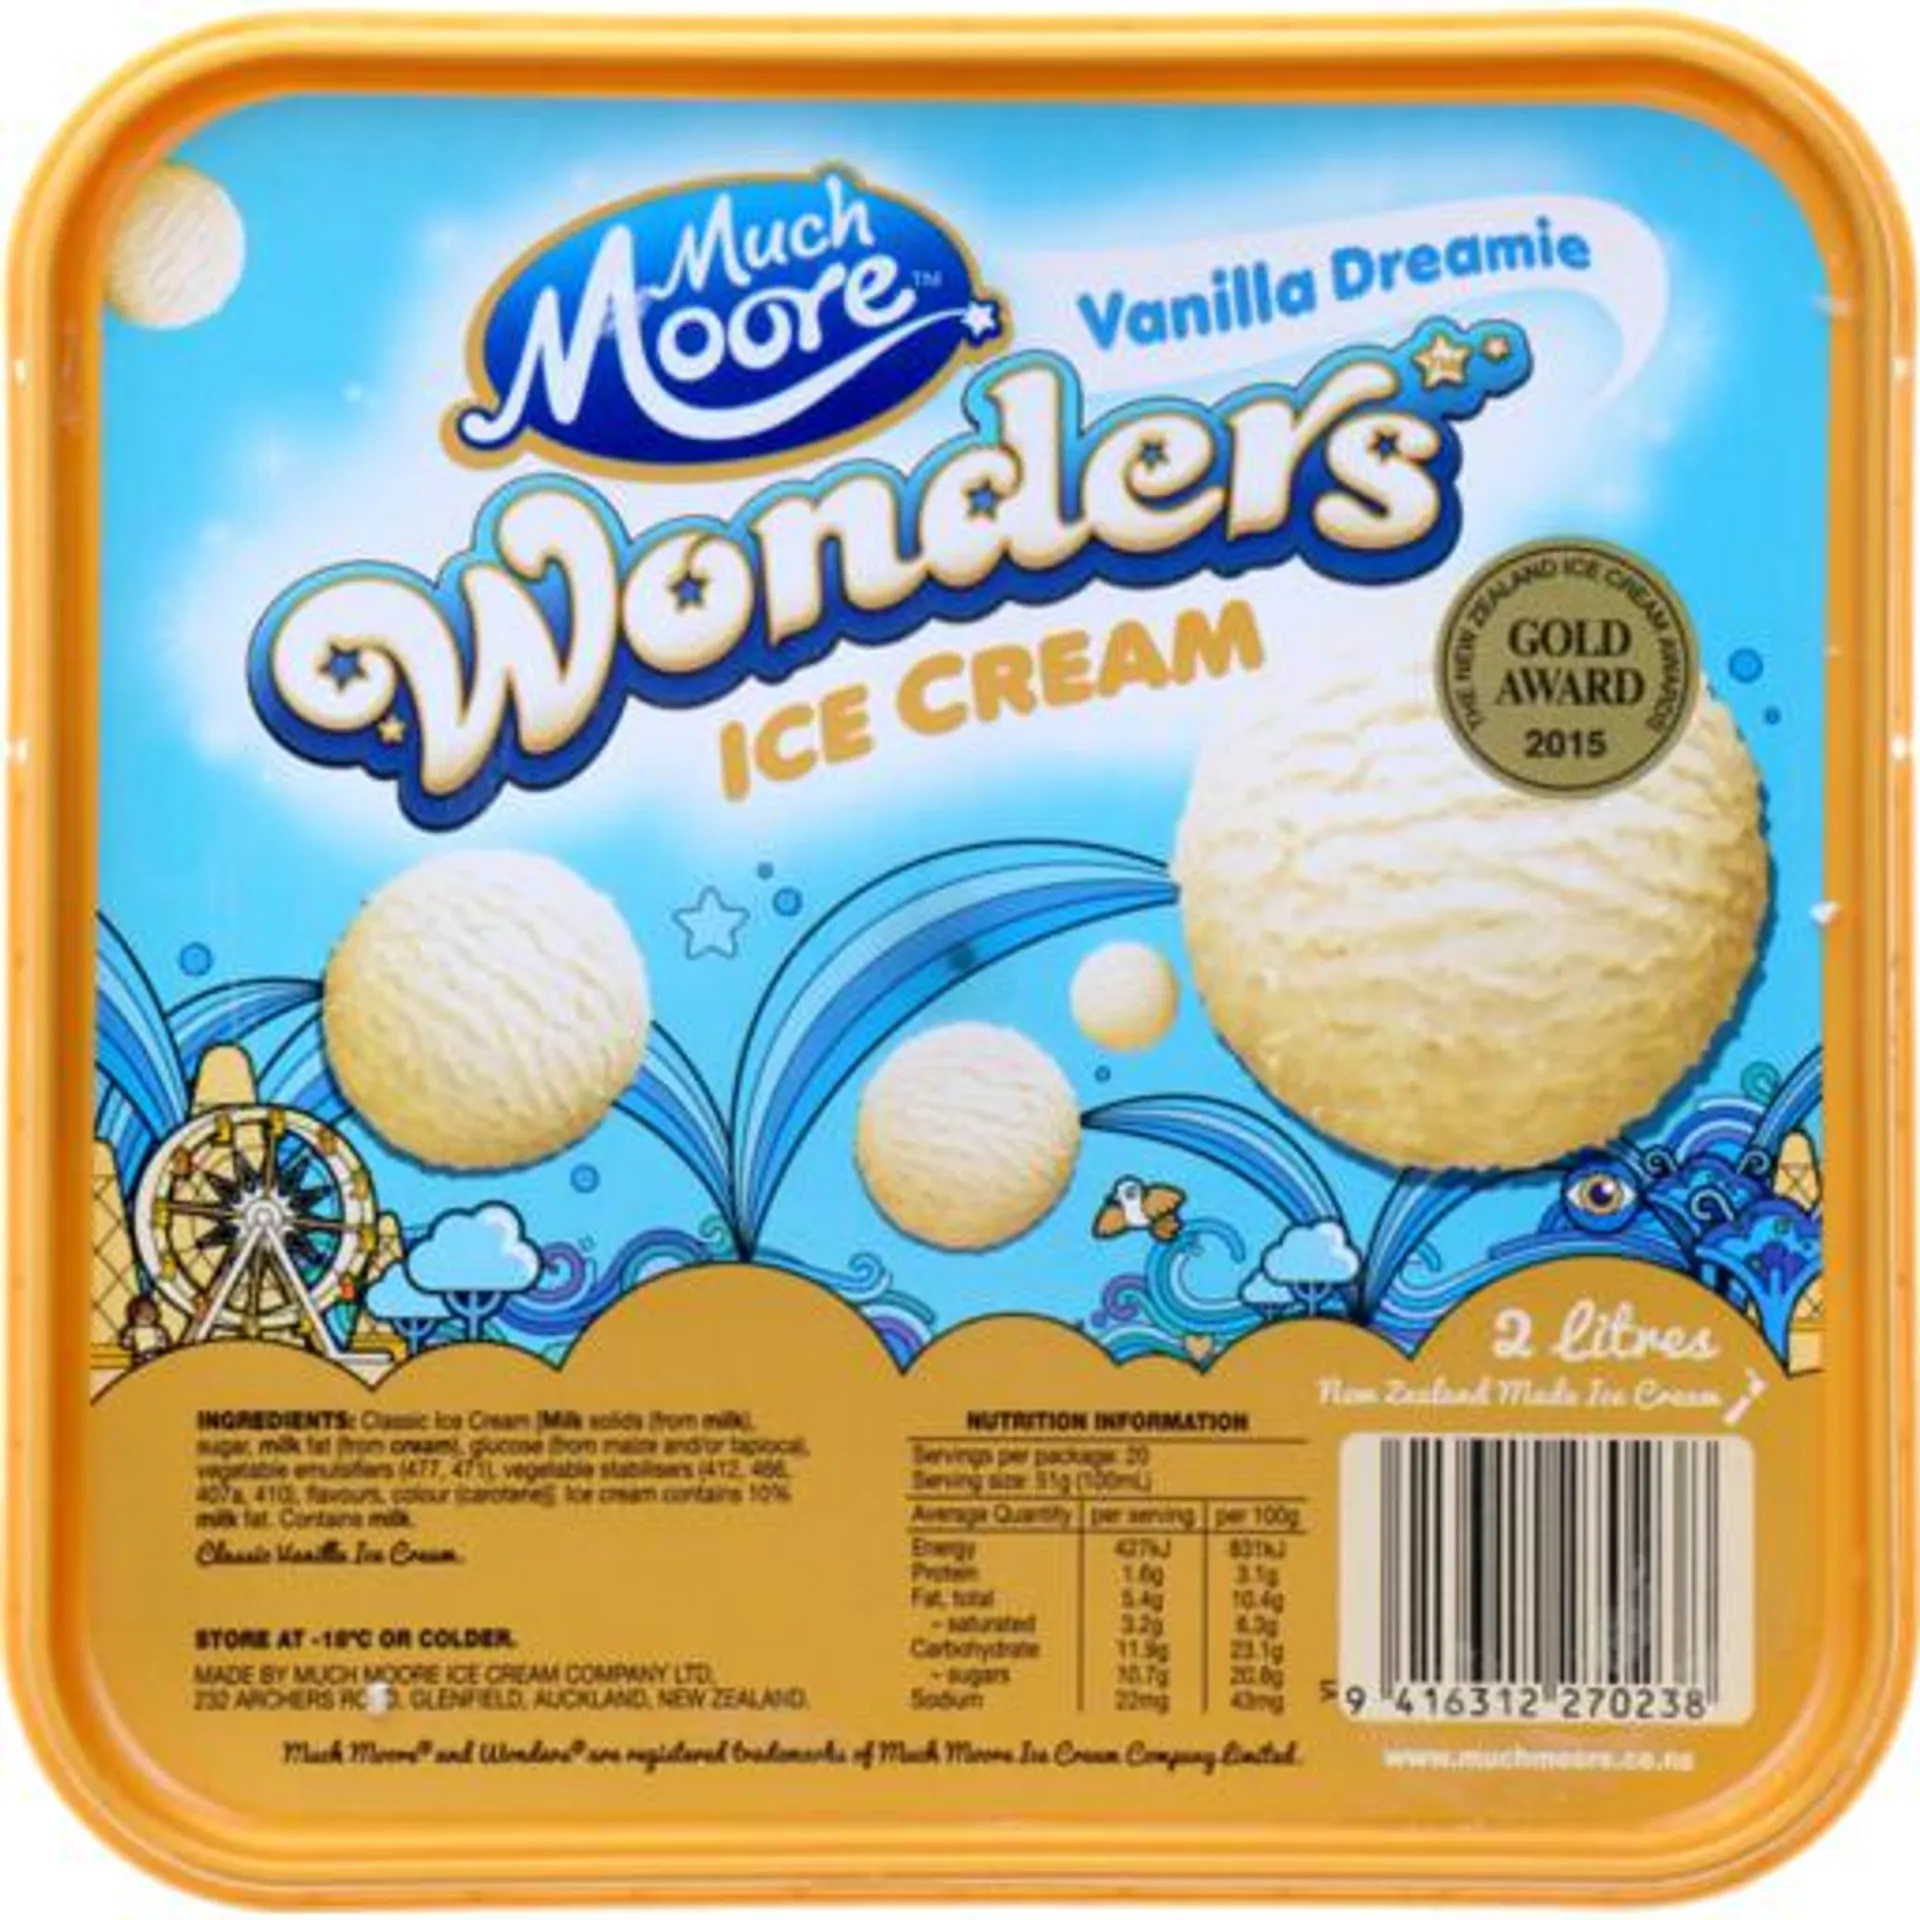 Much Moore Ice Cream Wonders Vanilla Dream 2L